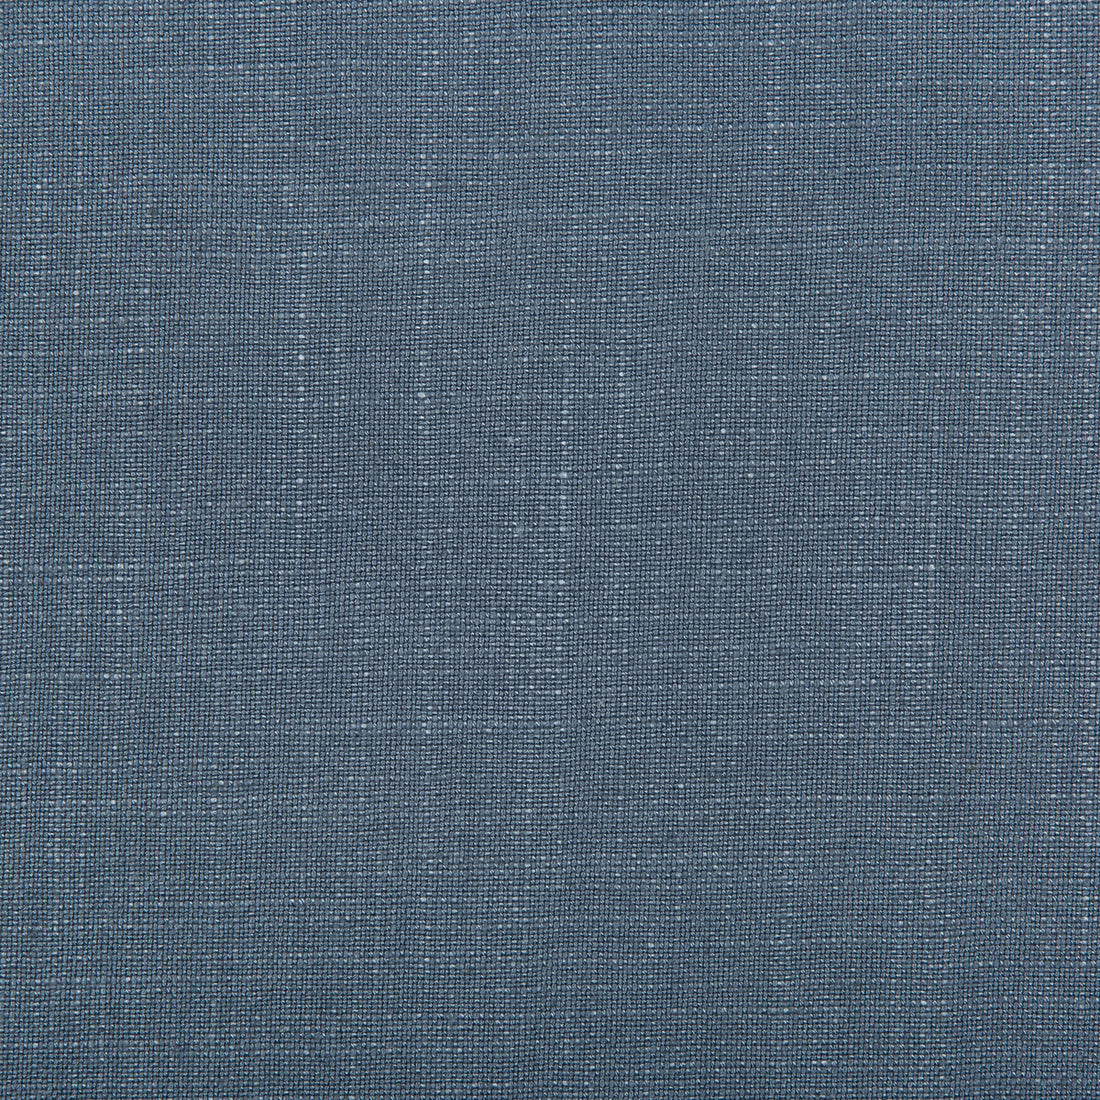 Aura fabric in marine color - pattern 35520.515.0 - by Kravet Design